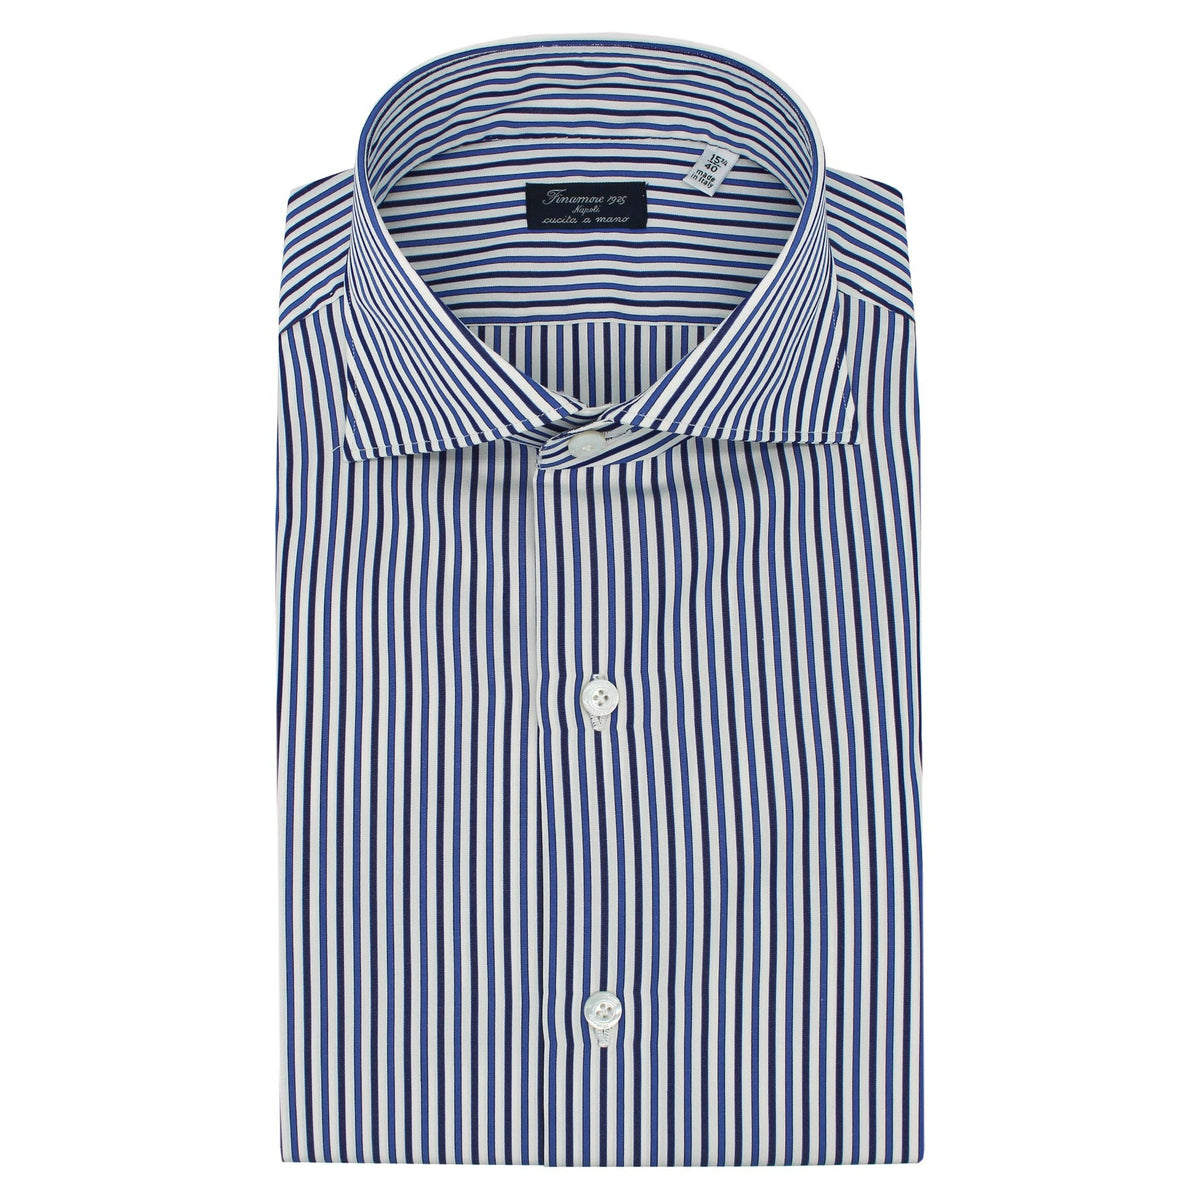 Milano slim fit blue and dark blue striped cotton shirt